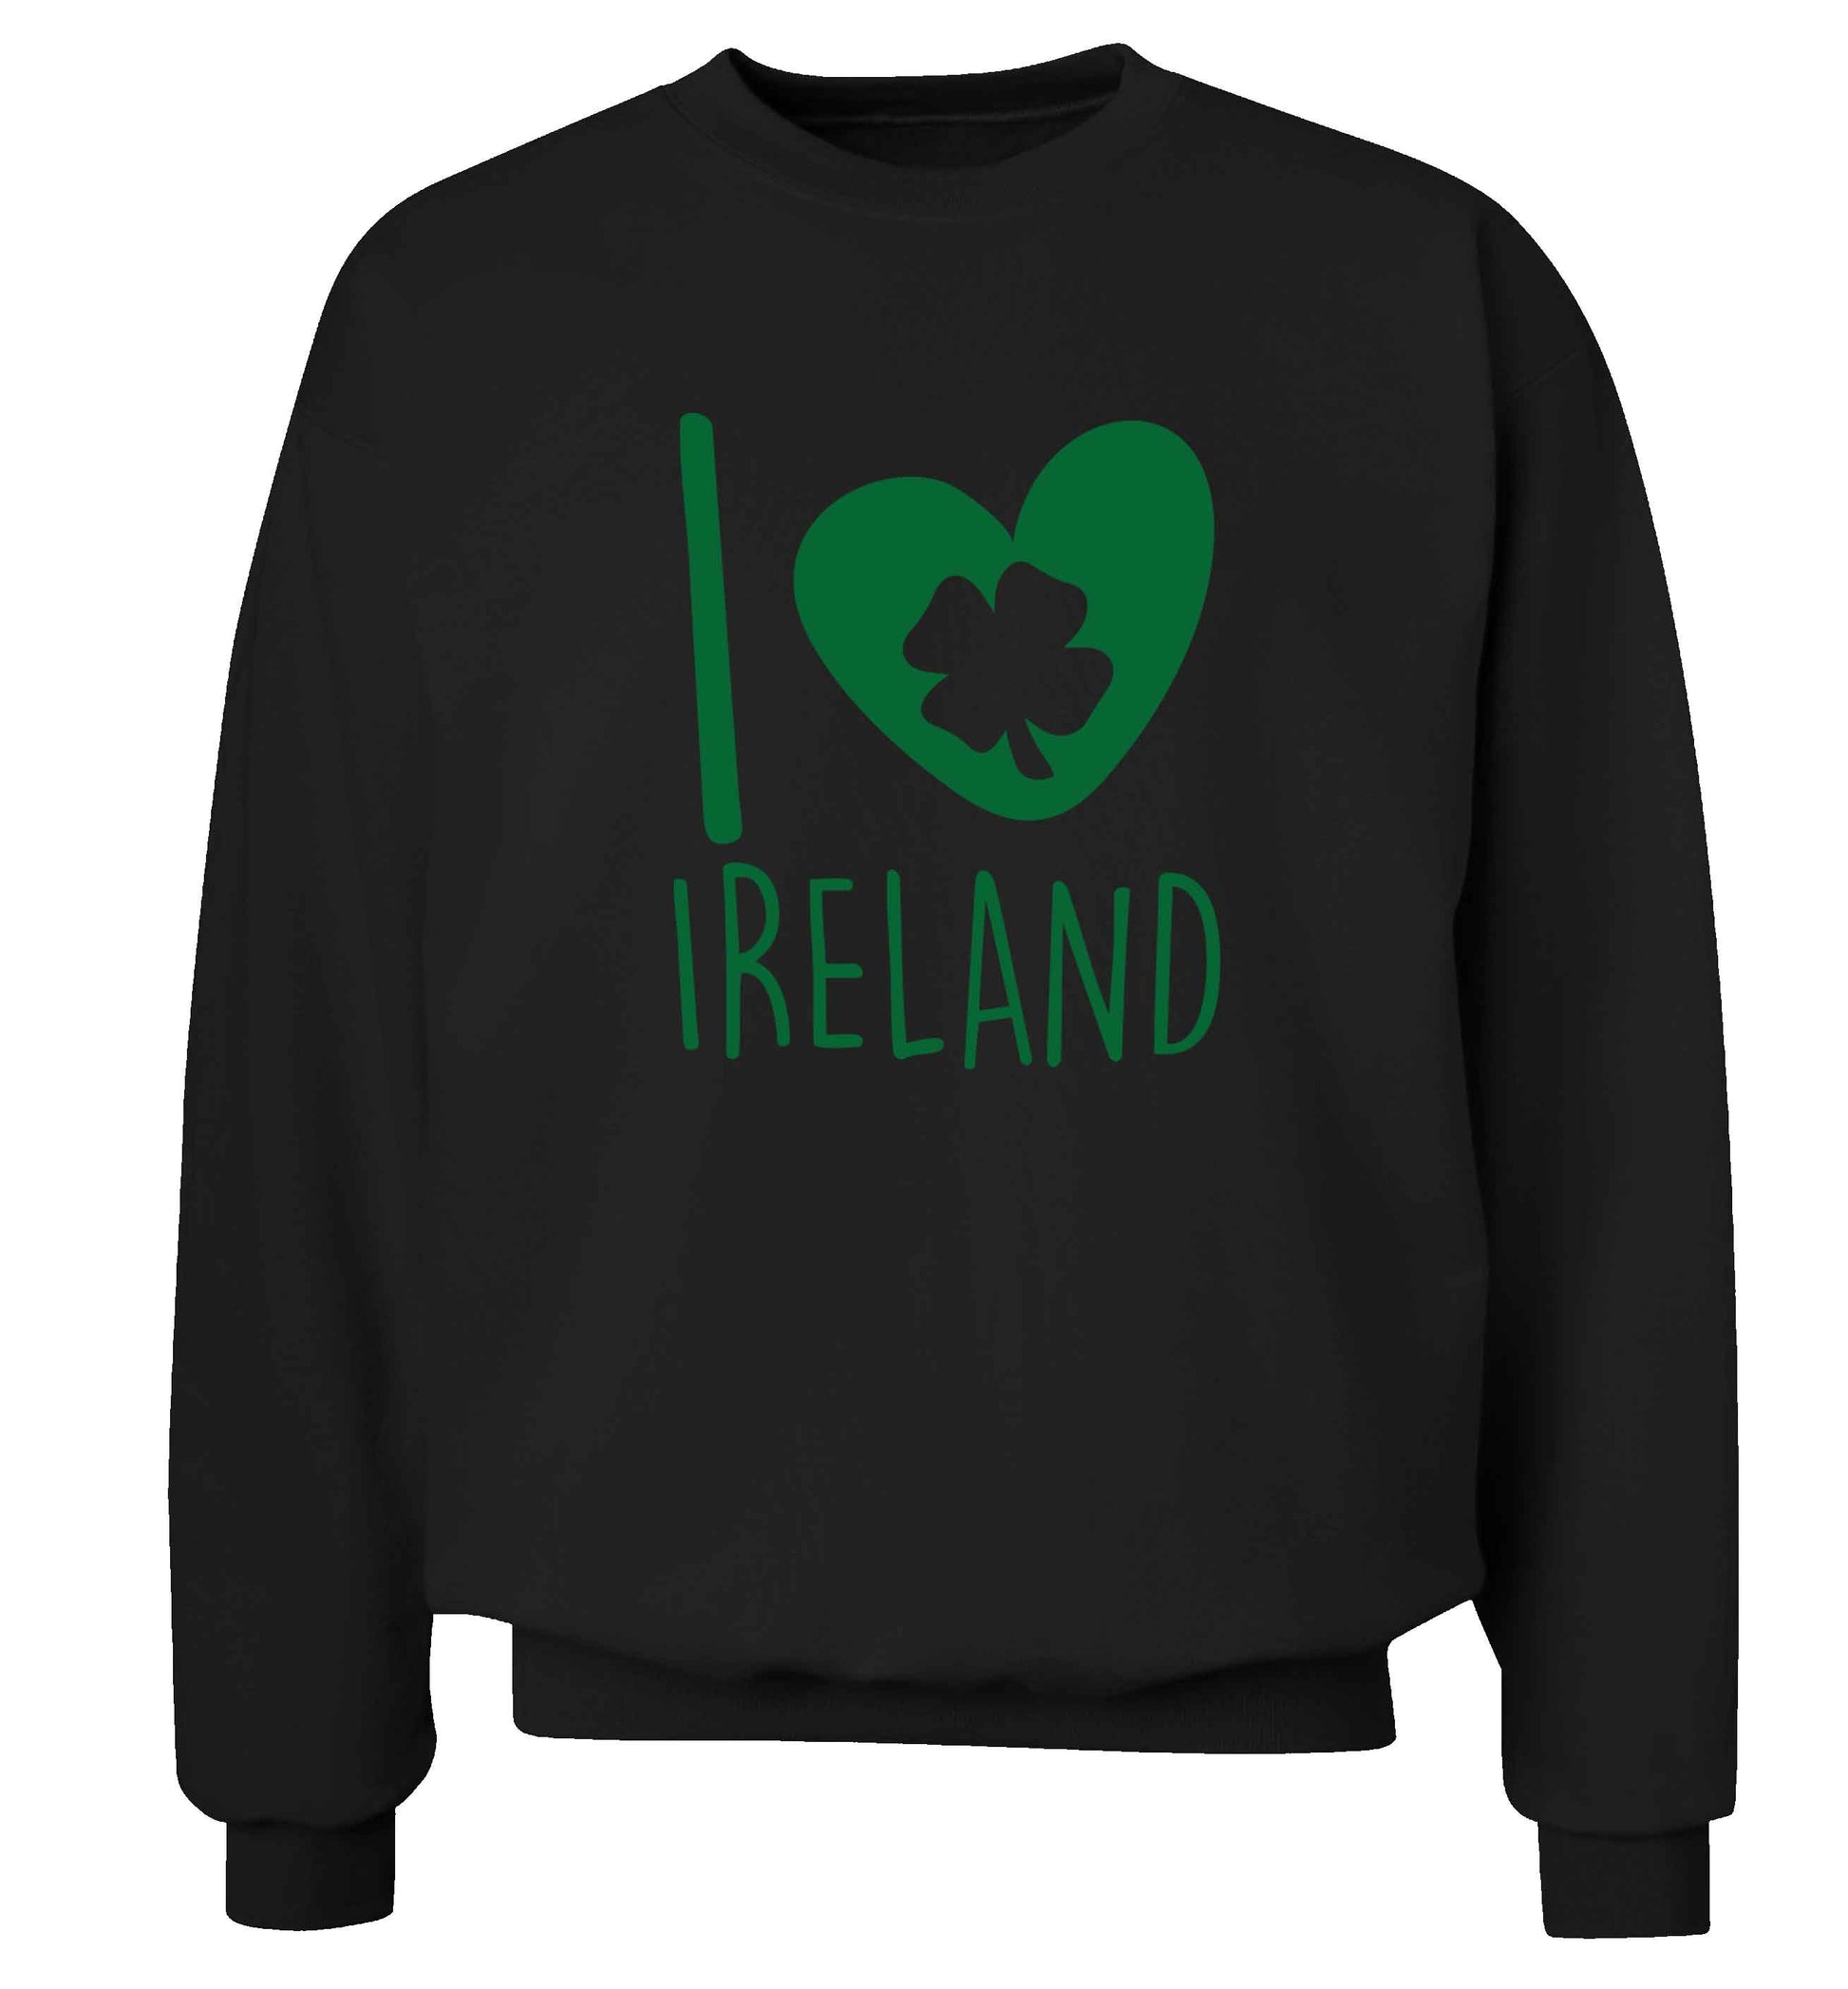 I love Ireland adult's unisex black sweater 2XL